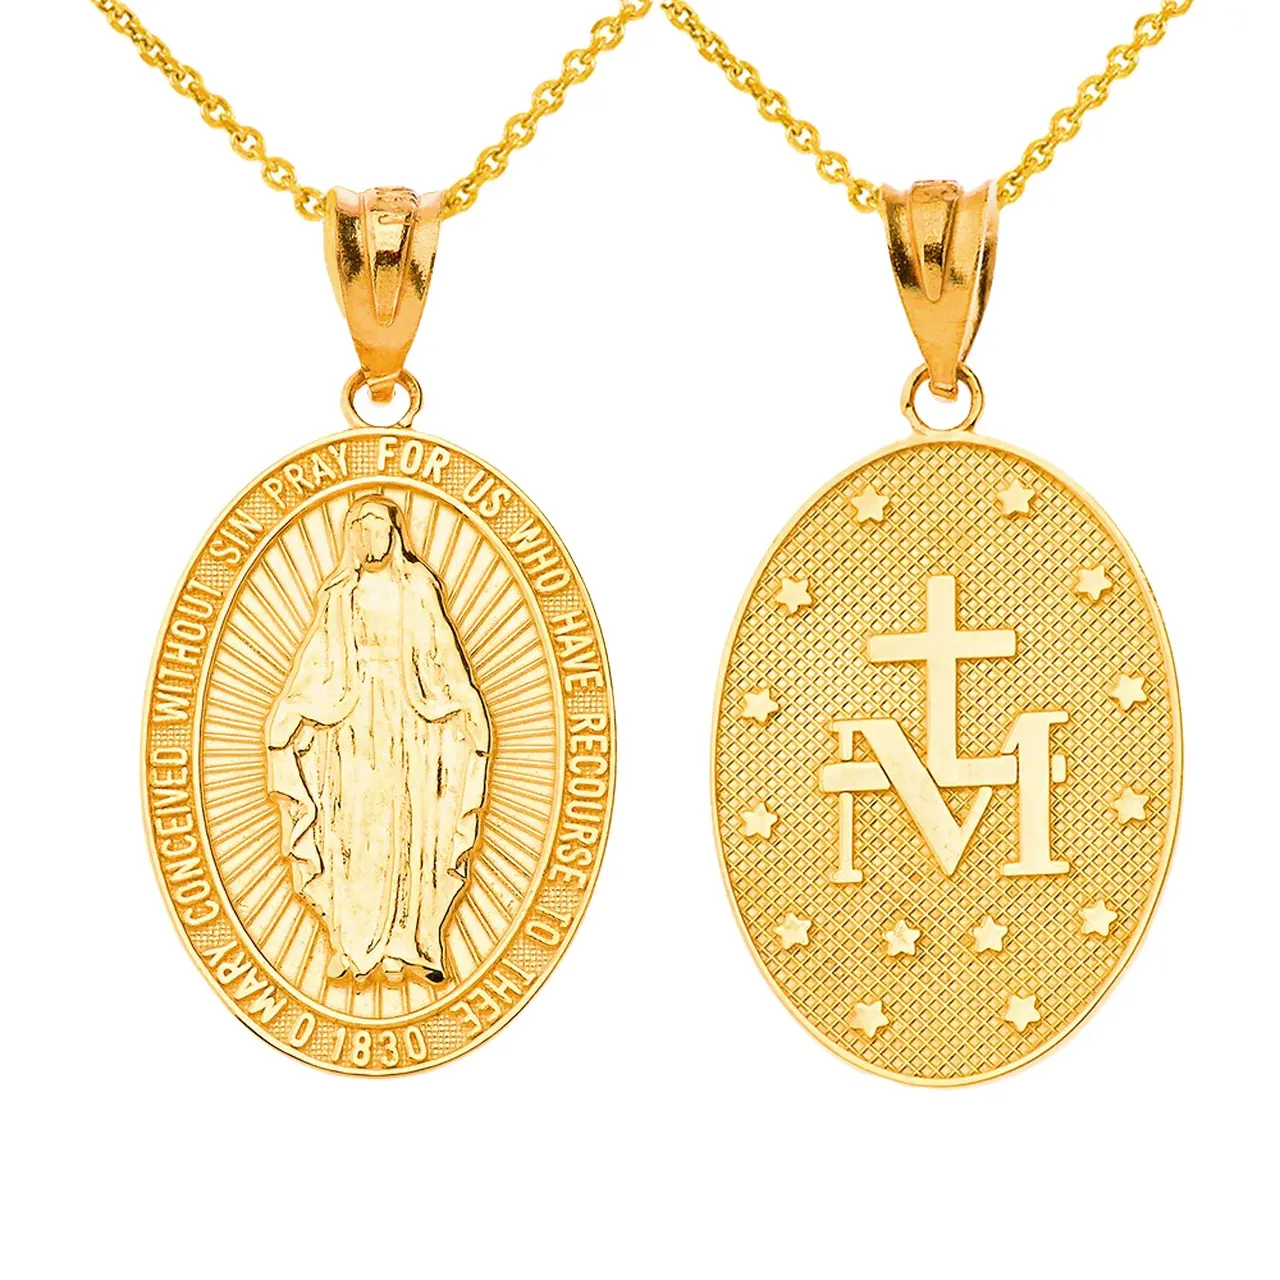 Medali Kudus medali Katolik kustom perak relijius agama Kristen